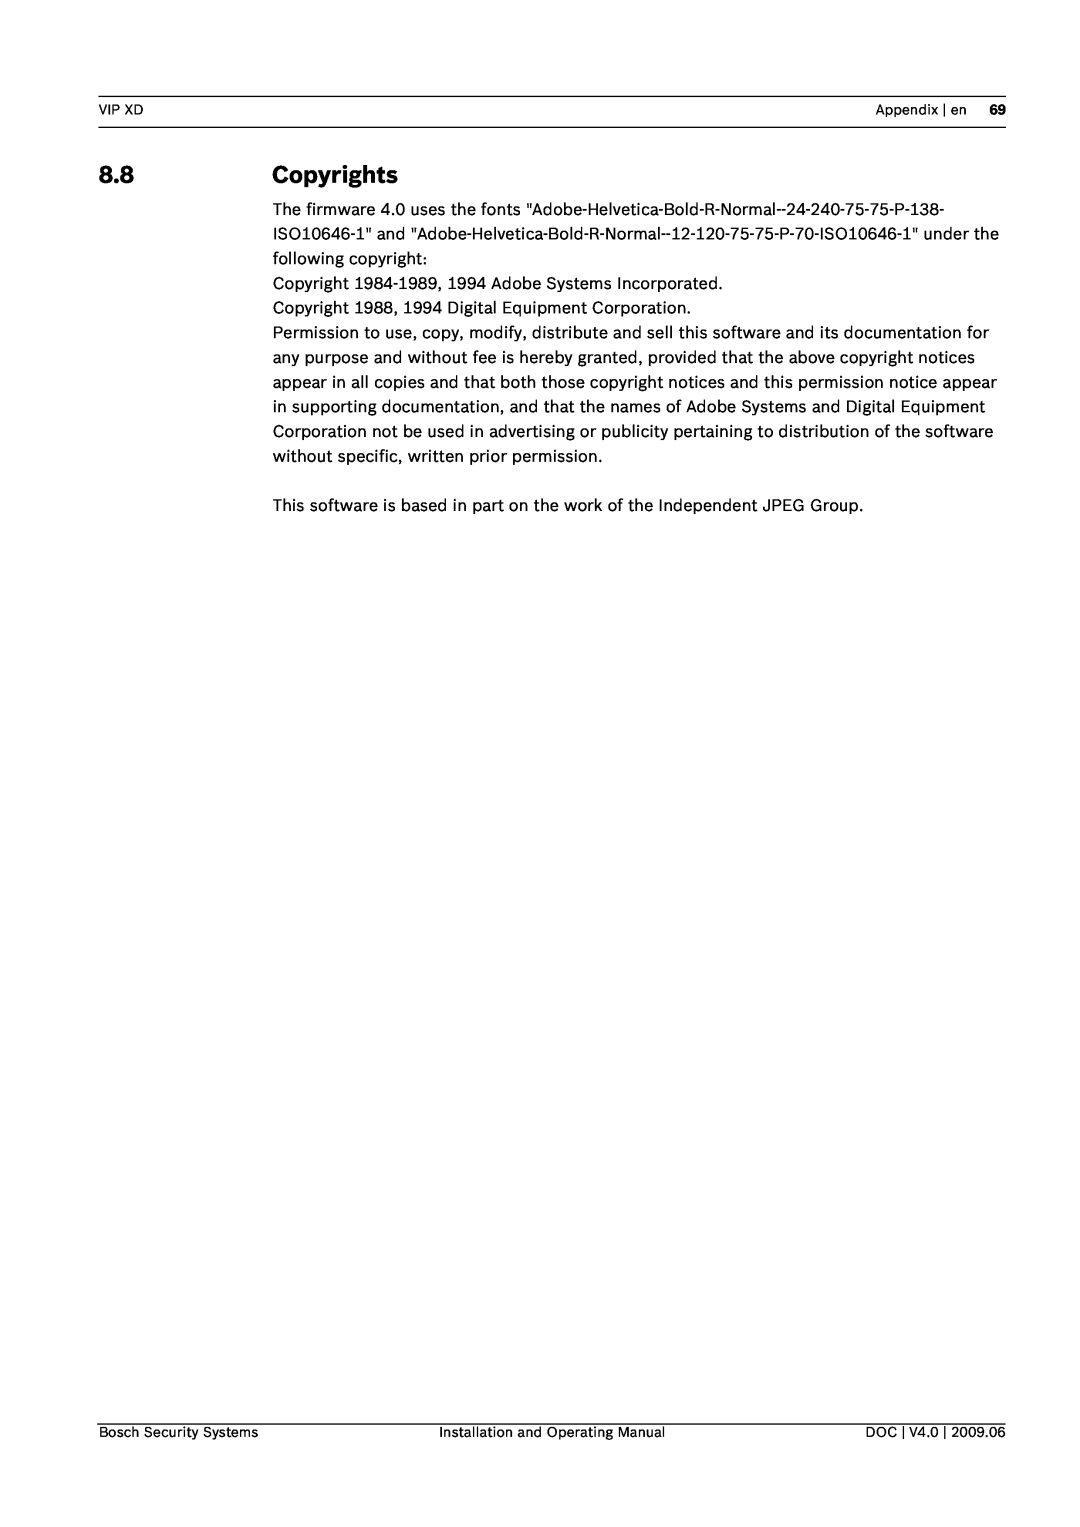 Bosch Appliances VIP, XD manual 8.8Copyrights 